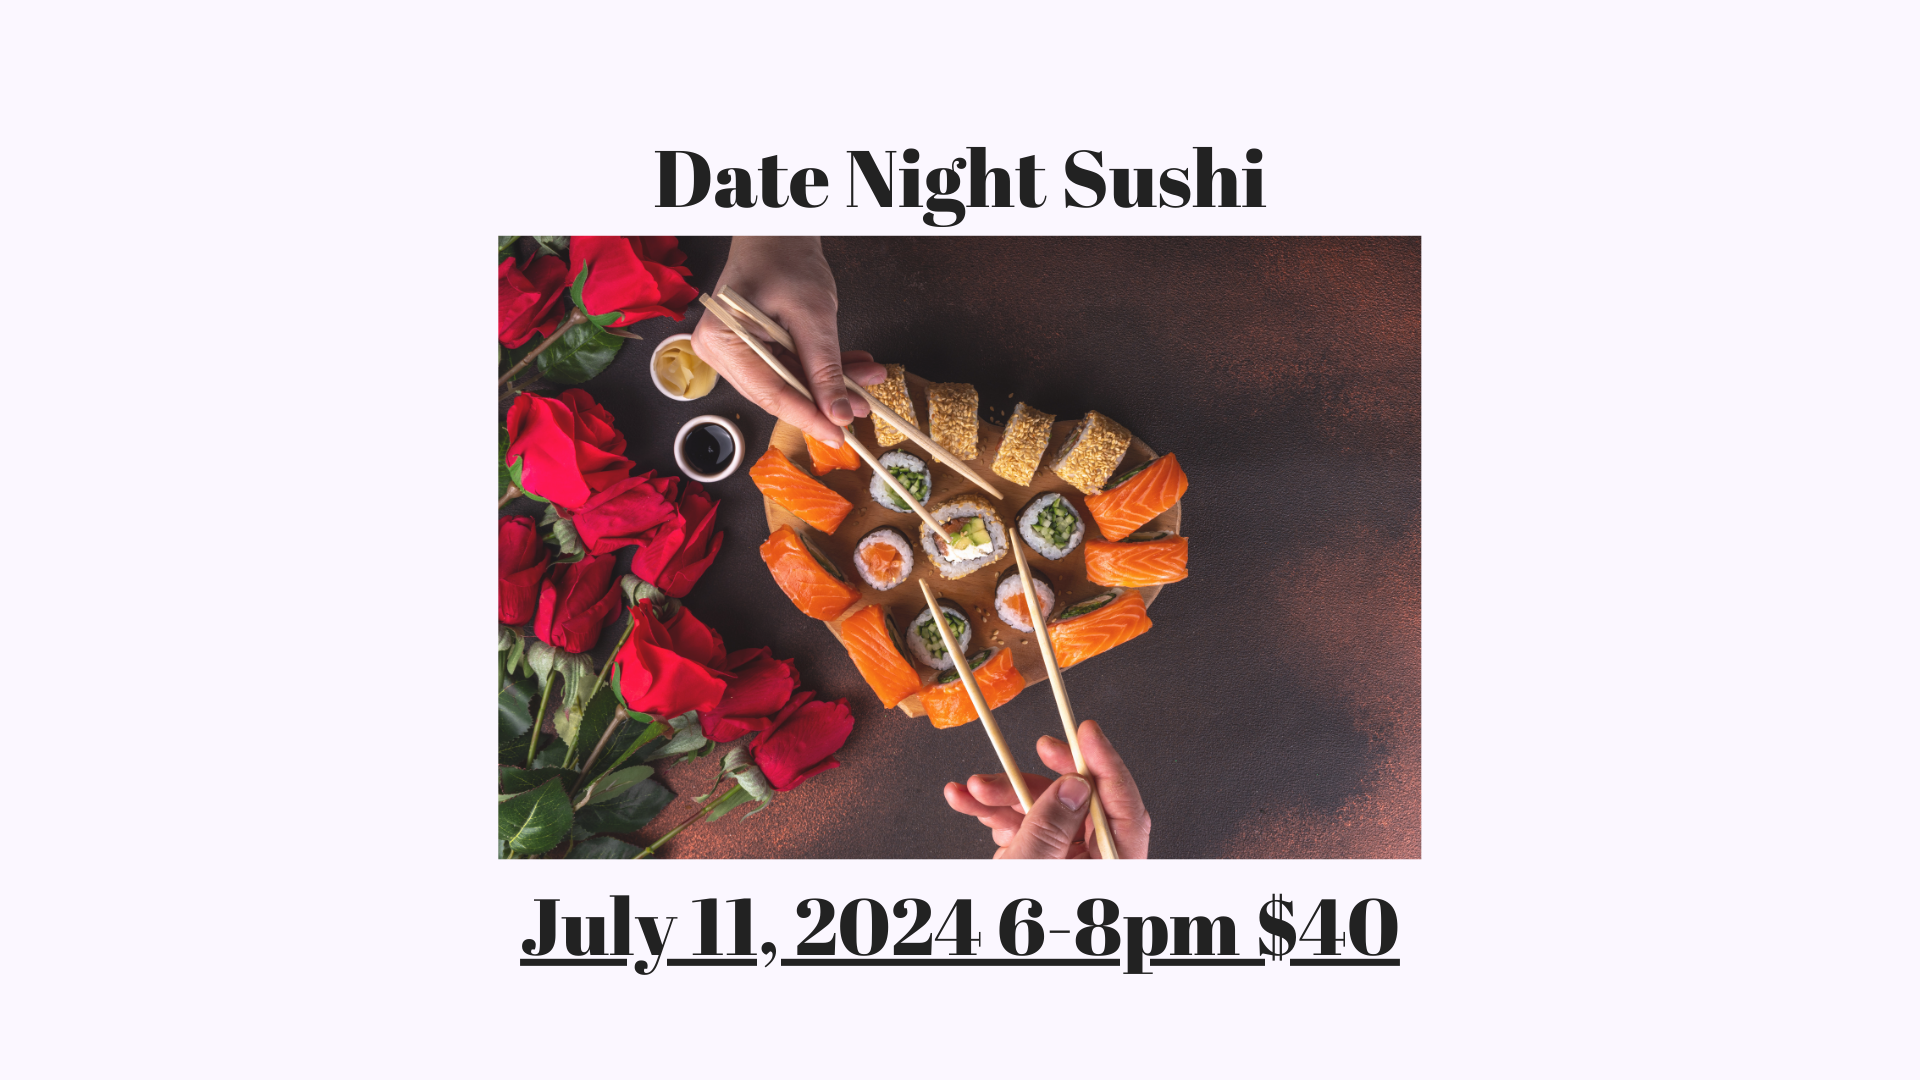 Date Night Sushi July 11 6-8pm $40